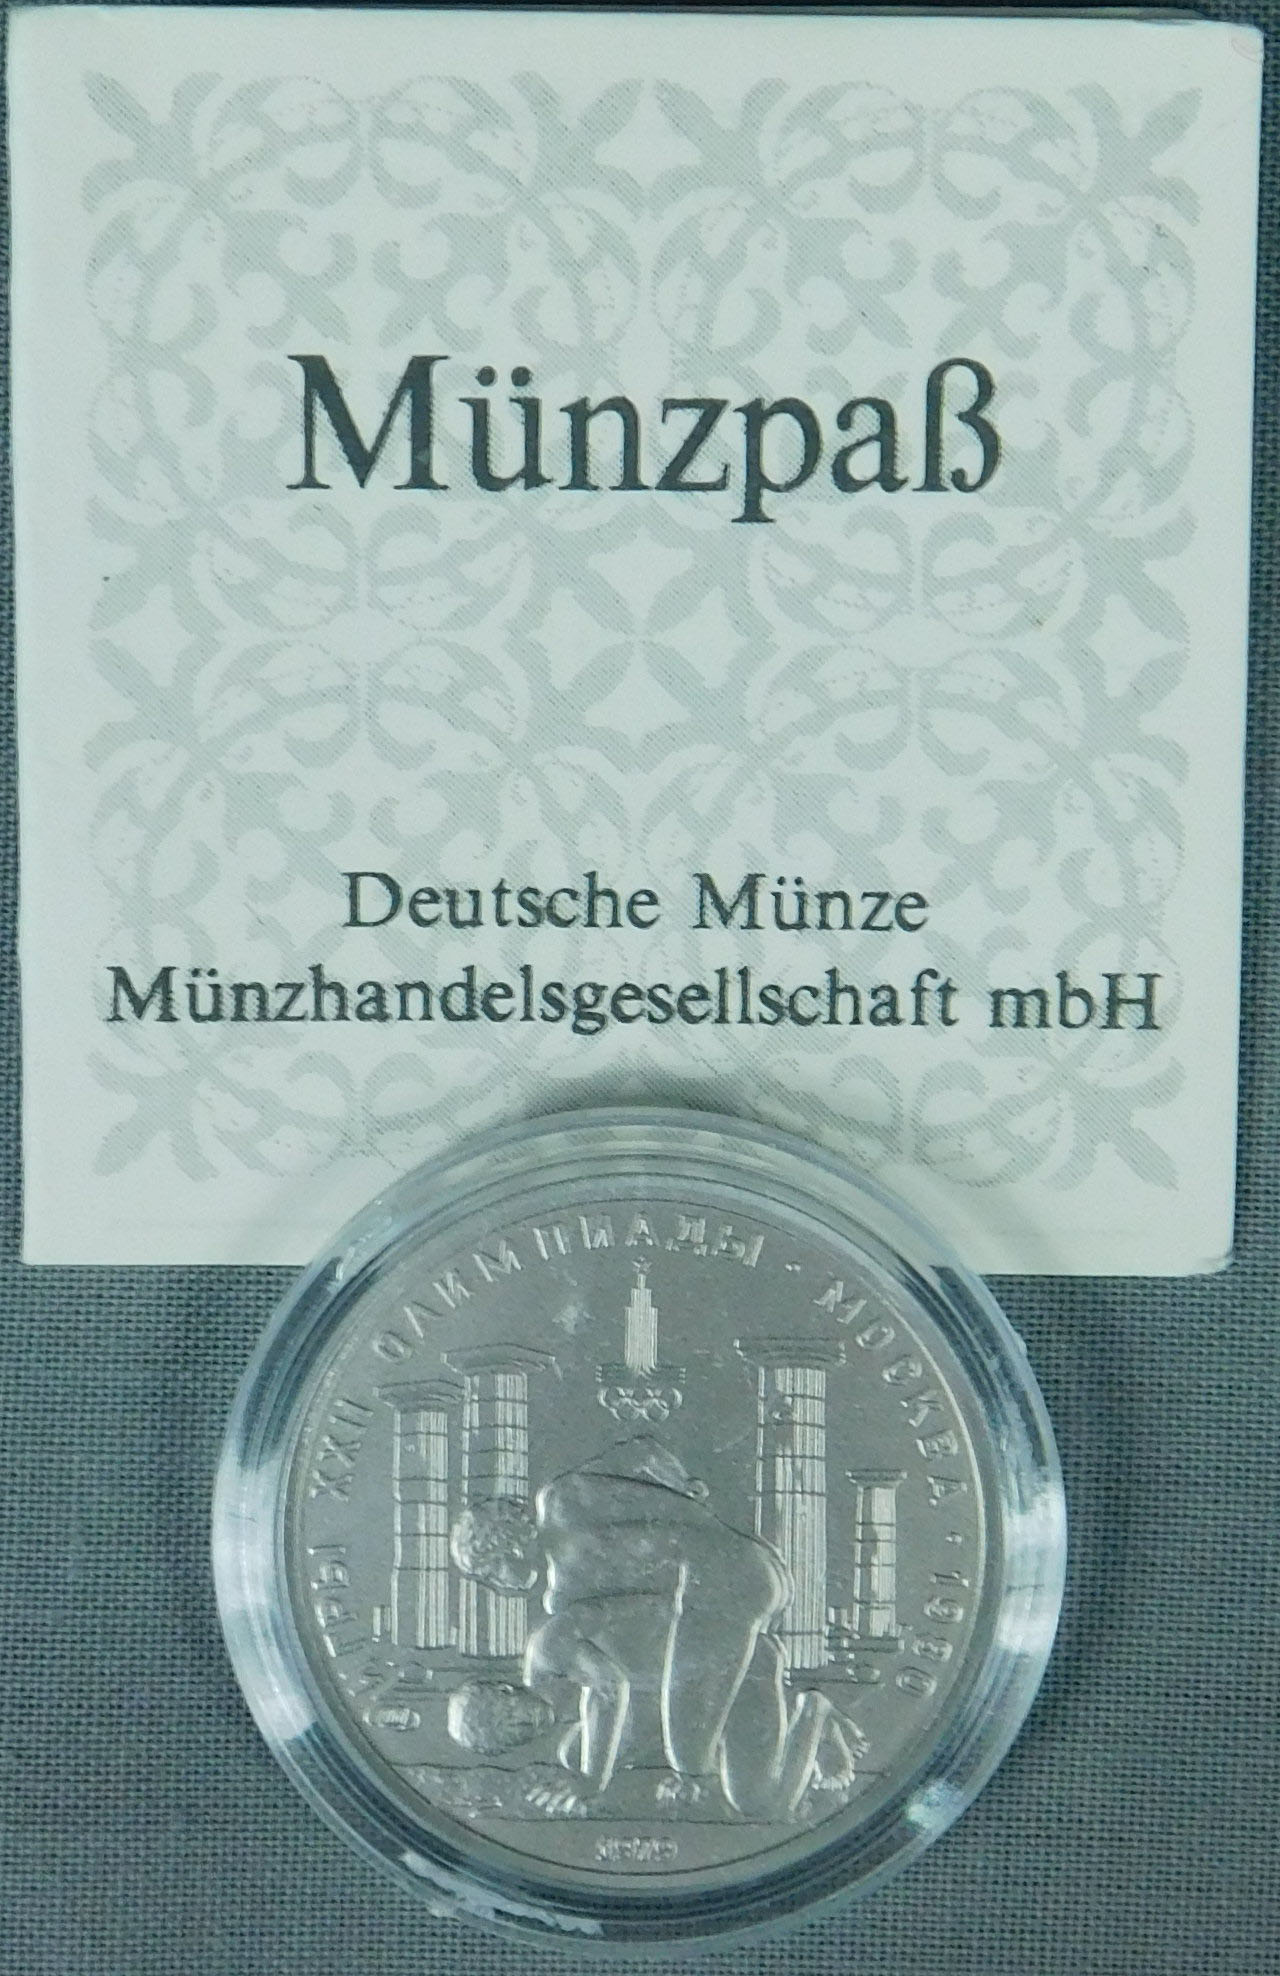 1 Platinmünze. 150 Rubel. Sowjetunion. 1979. - Image 2 of 5